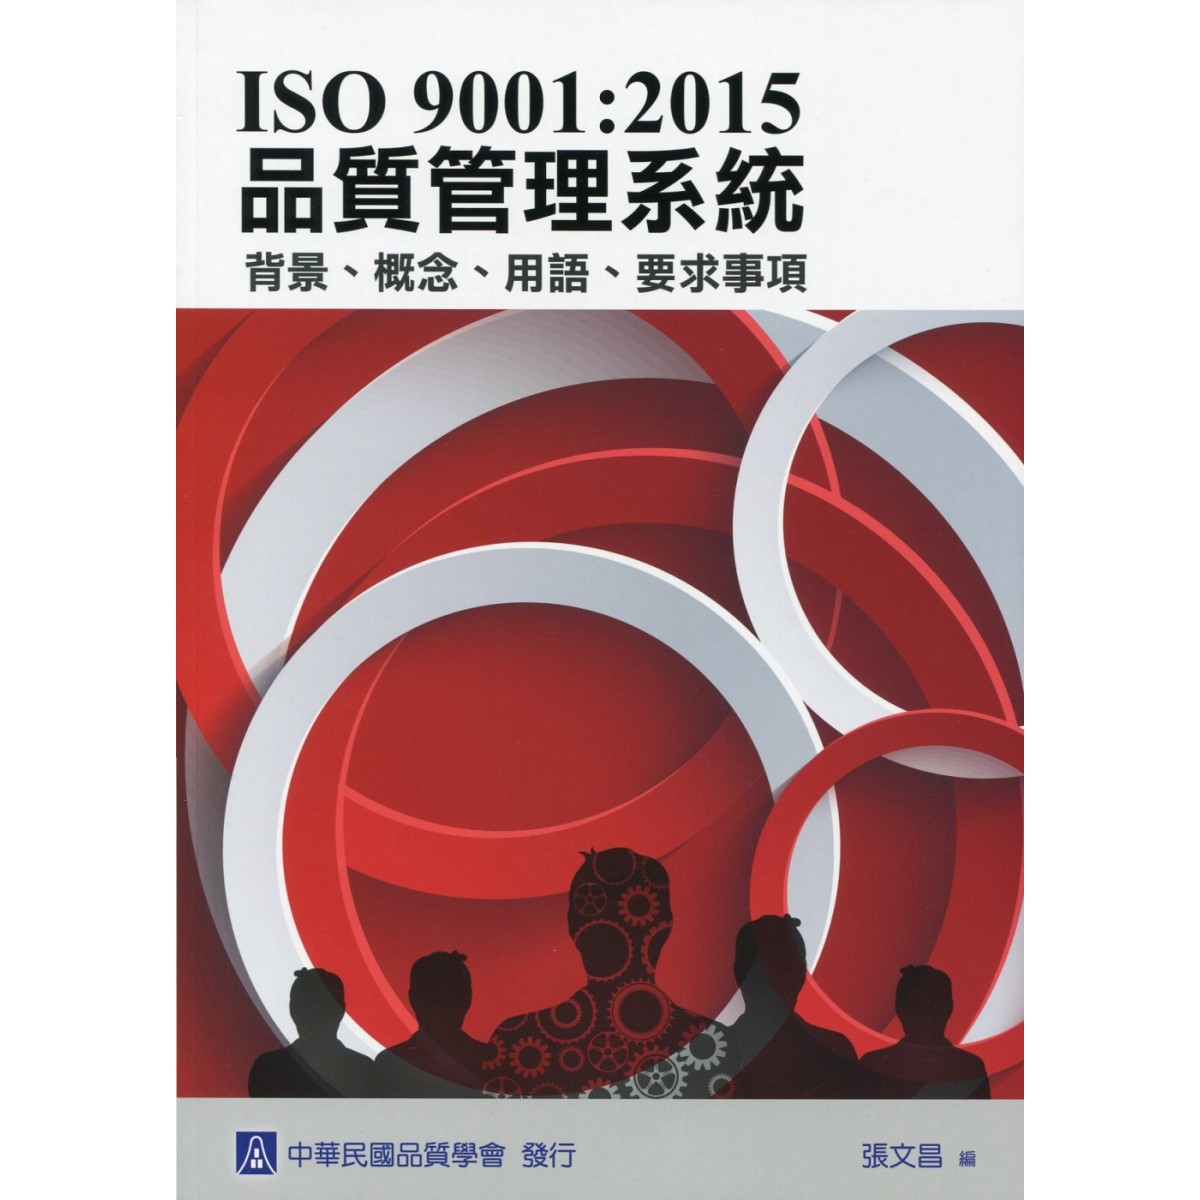 ISO 9001G2015 ~޲zt IBBλyBnDƶ